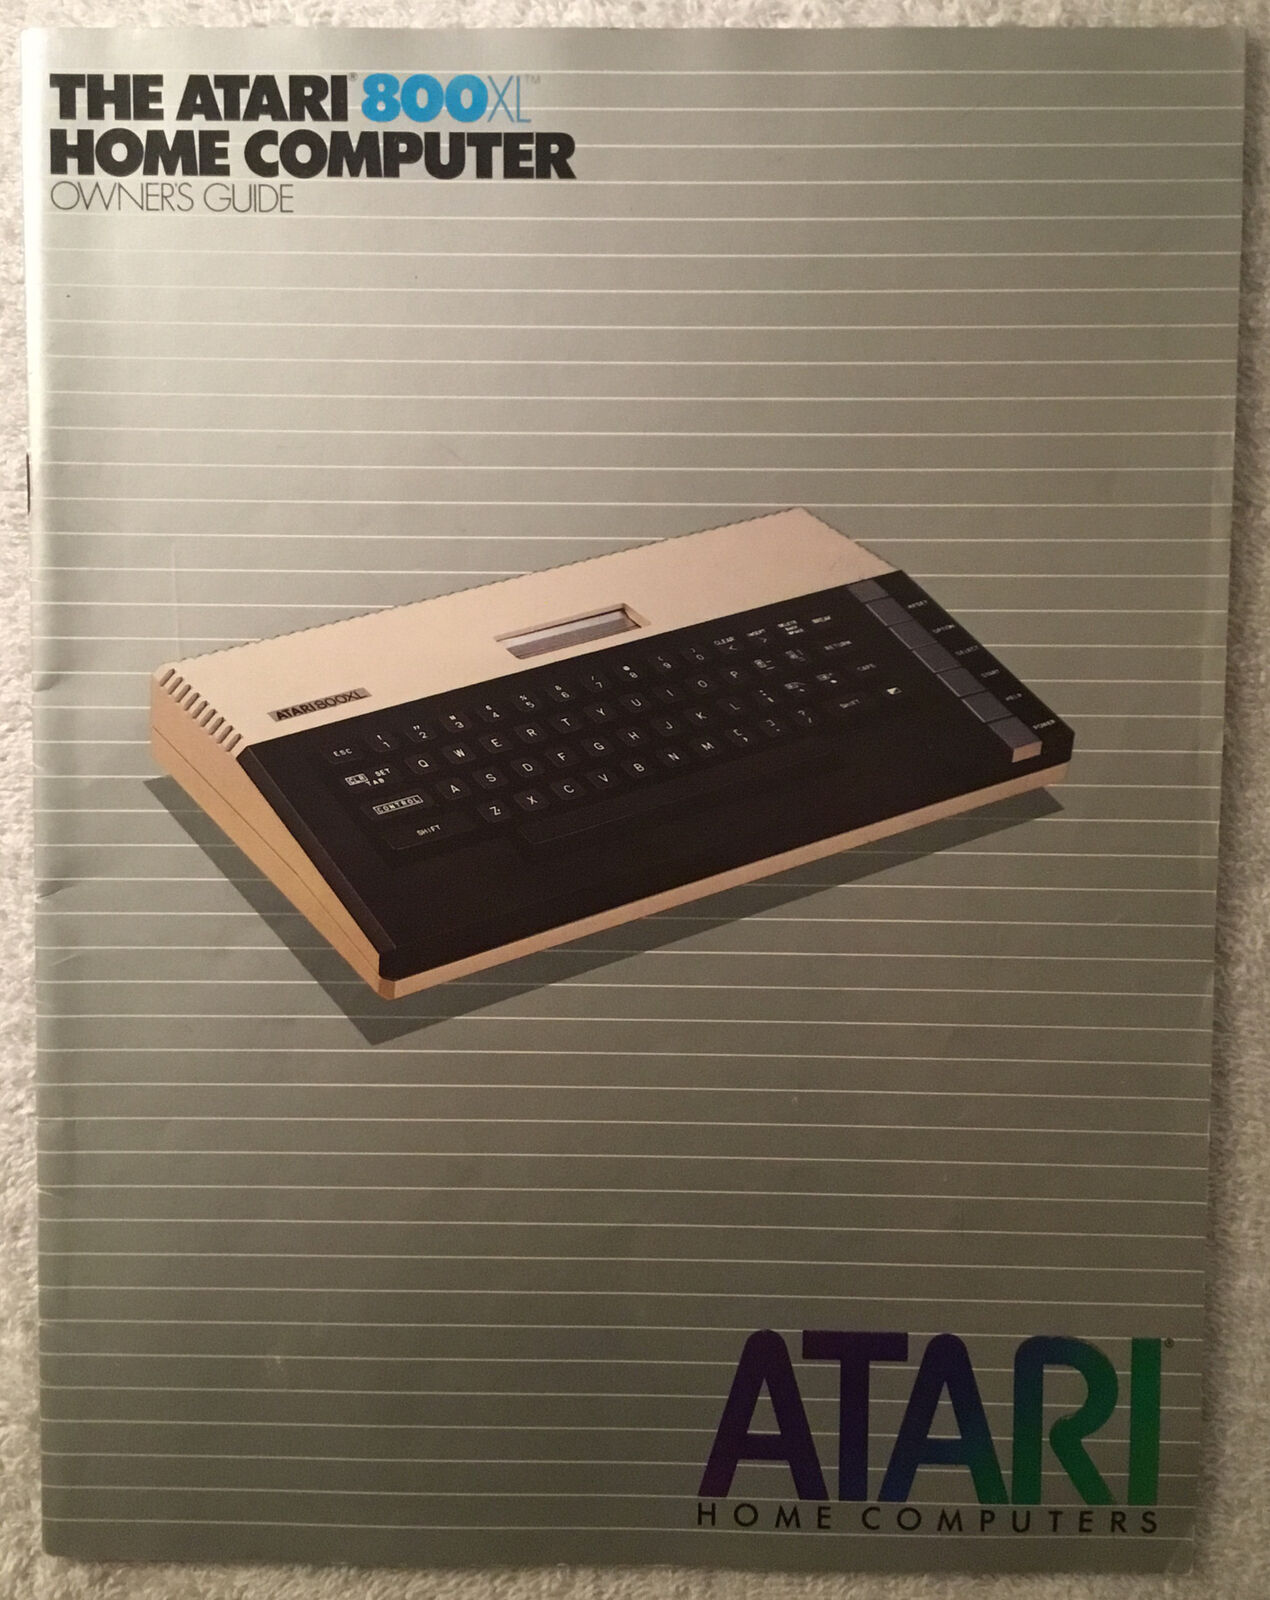 1983 Atari 800XL Home Computer Owners Guide Manual C061859 Rev A